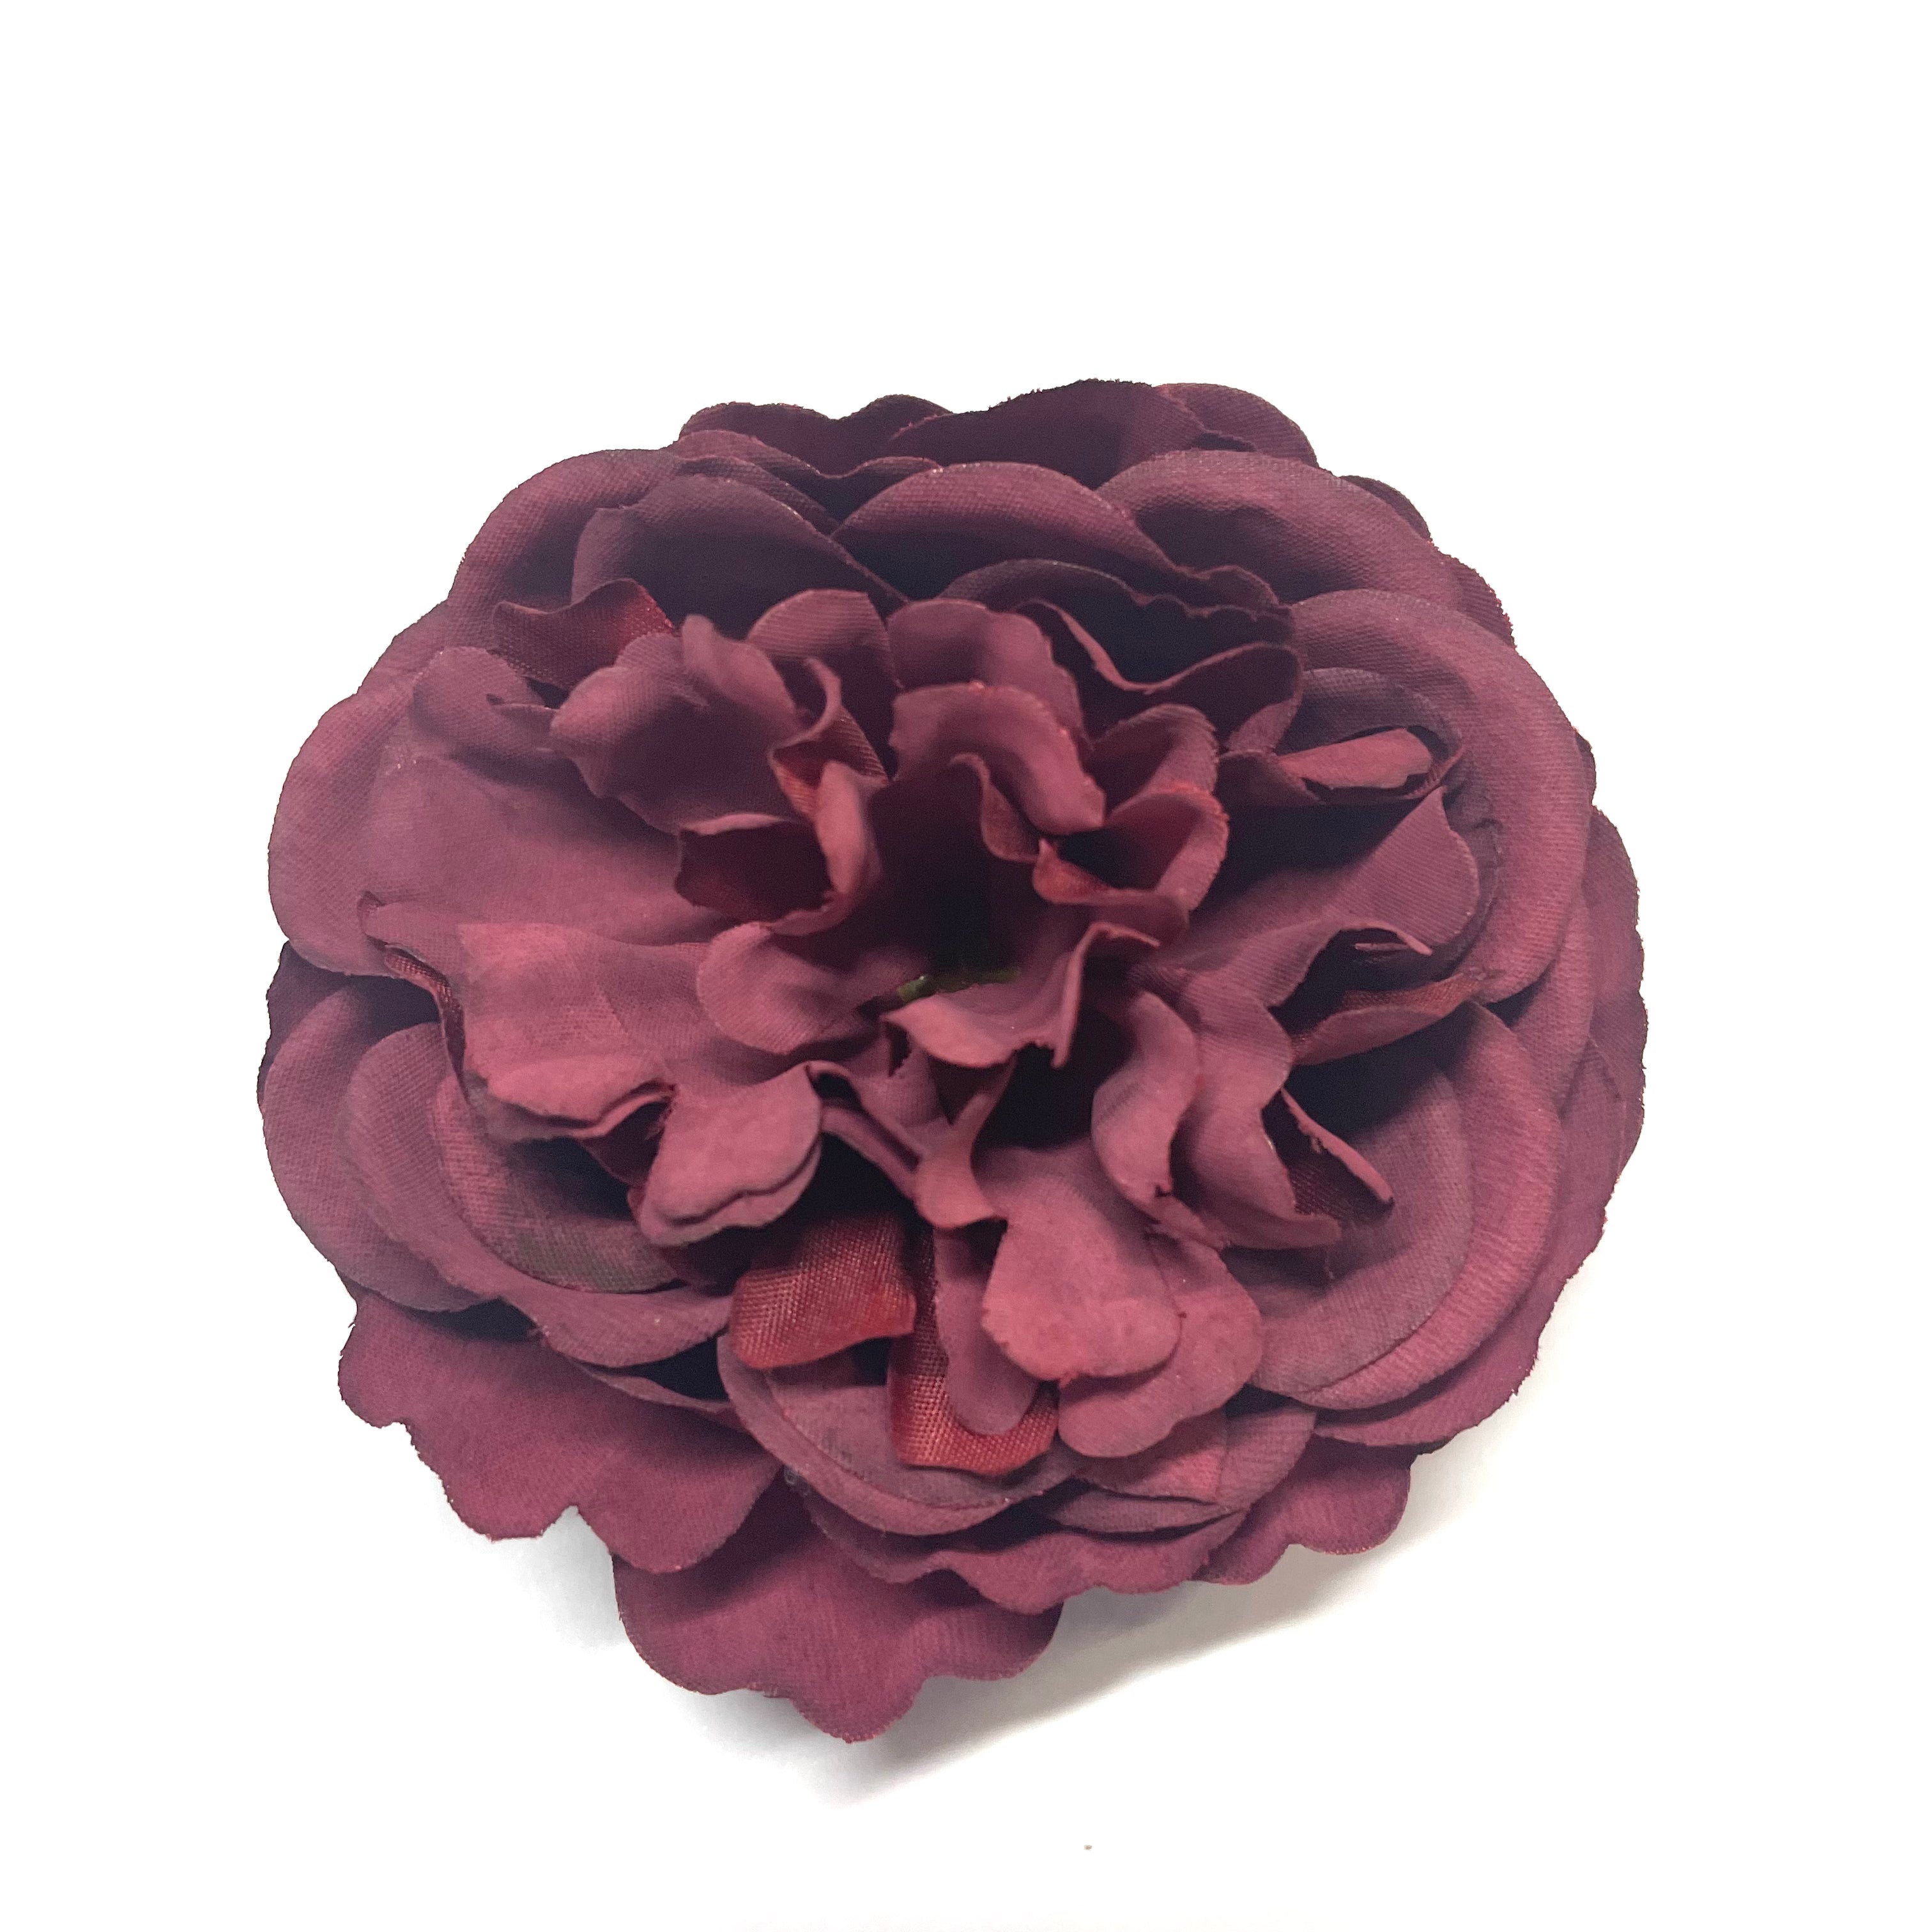 Artificial Silk Flower Head - Burgundy Rose Style 60 - 1pc